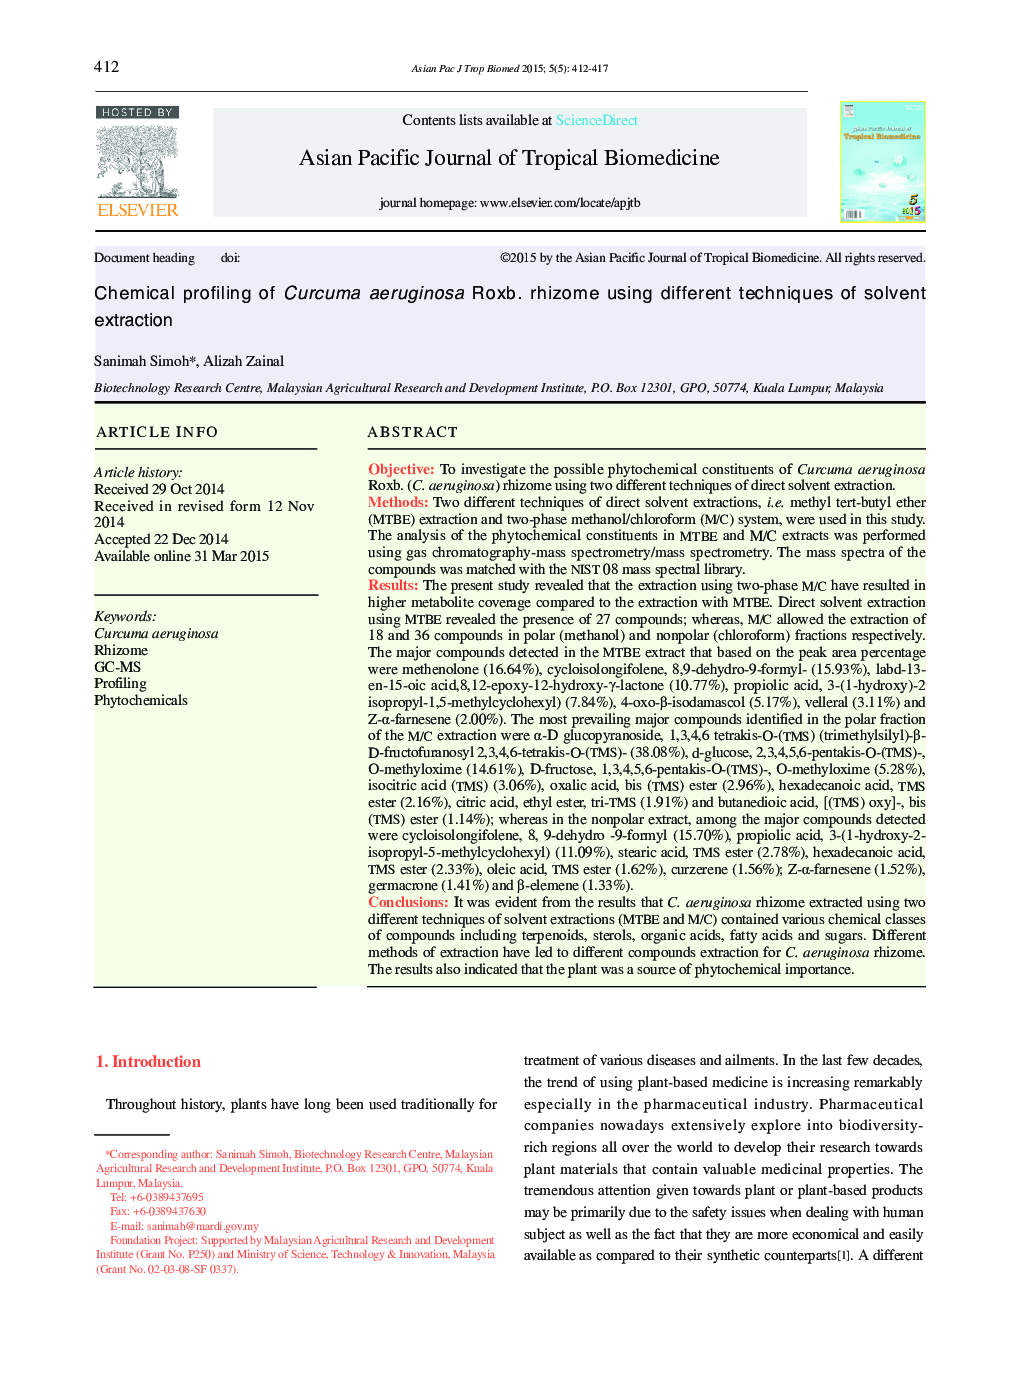 Chemical profiling of Curcuma aeruginosa Roxb. rhizome using different techniques of solvent extraction